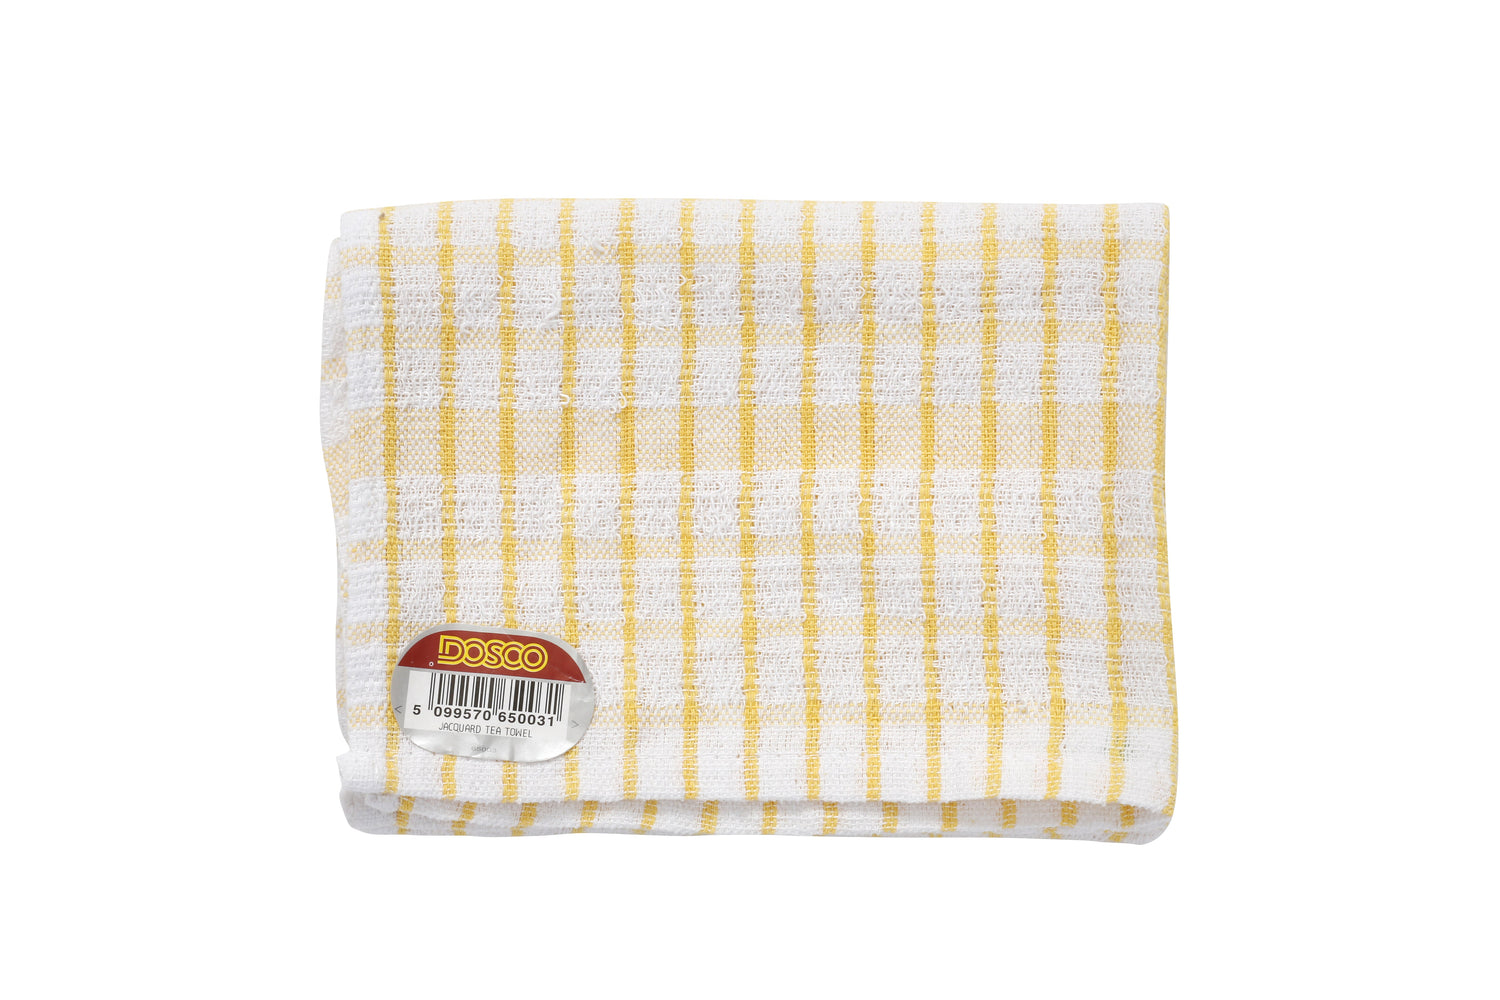 Dosco Jacquered Pattern Tea Towel